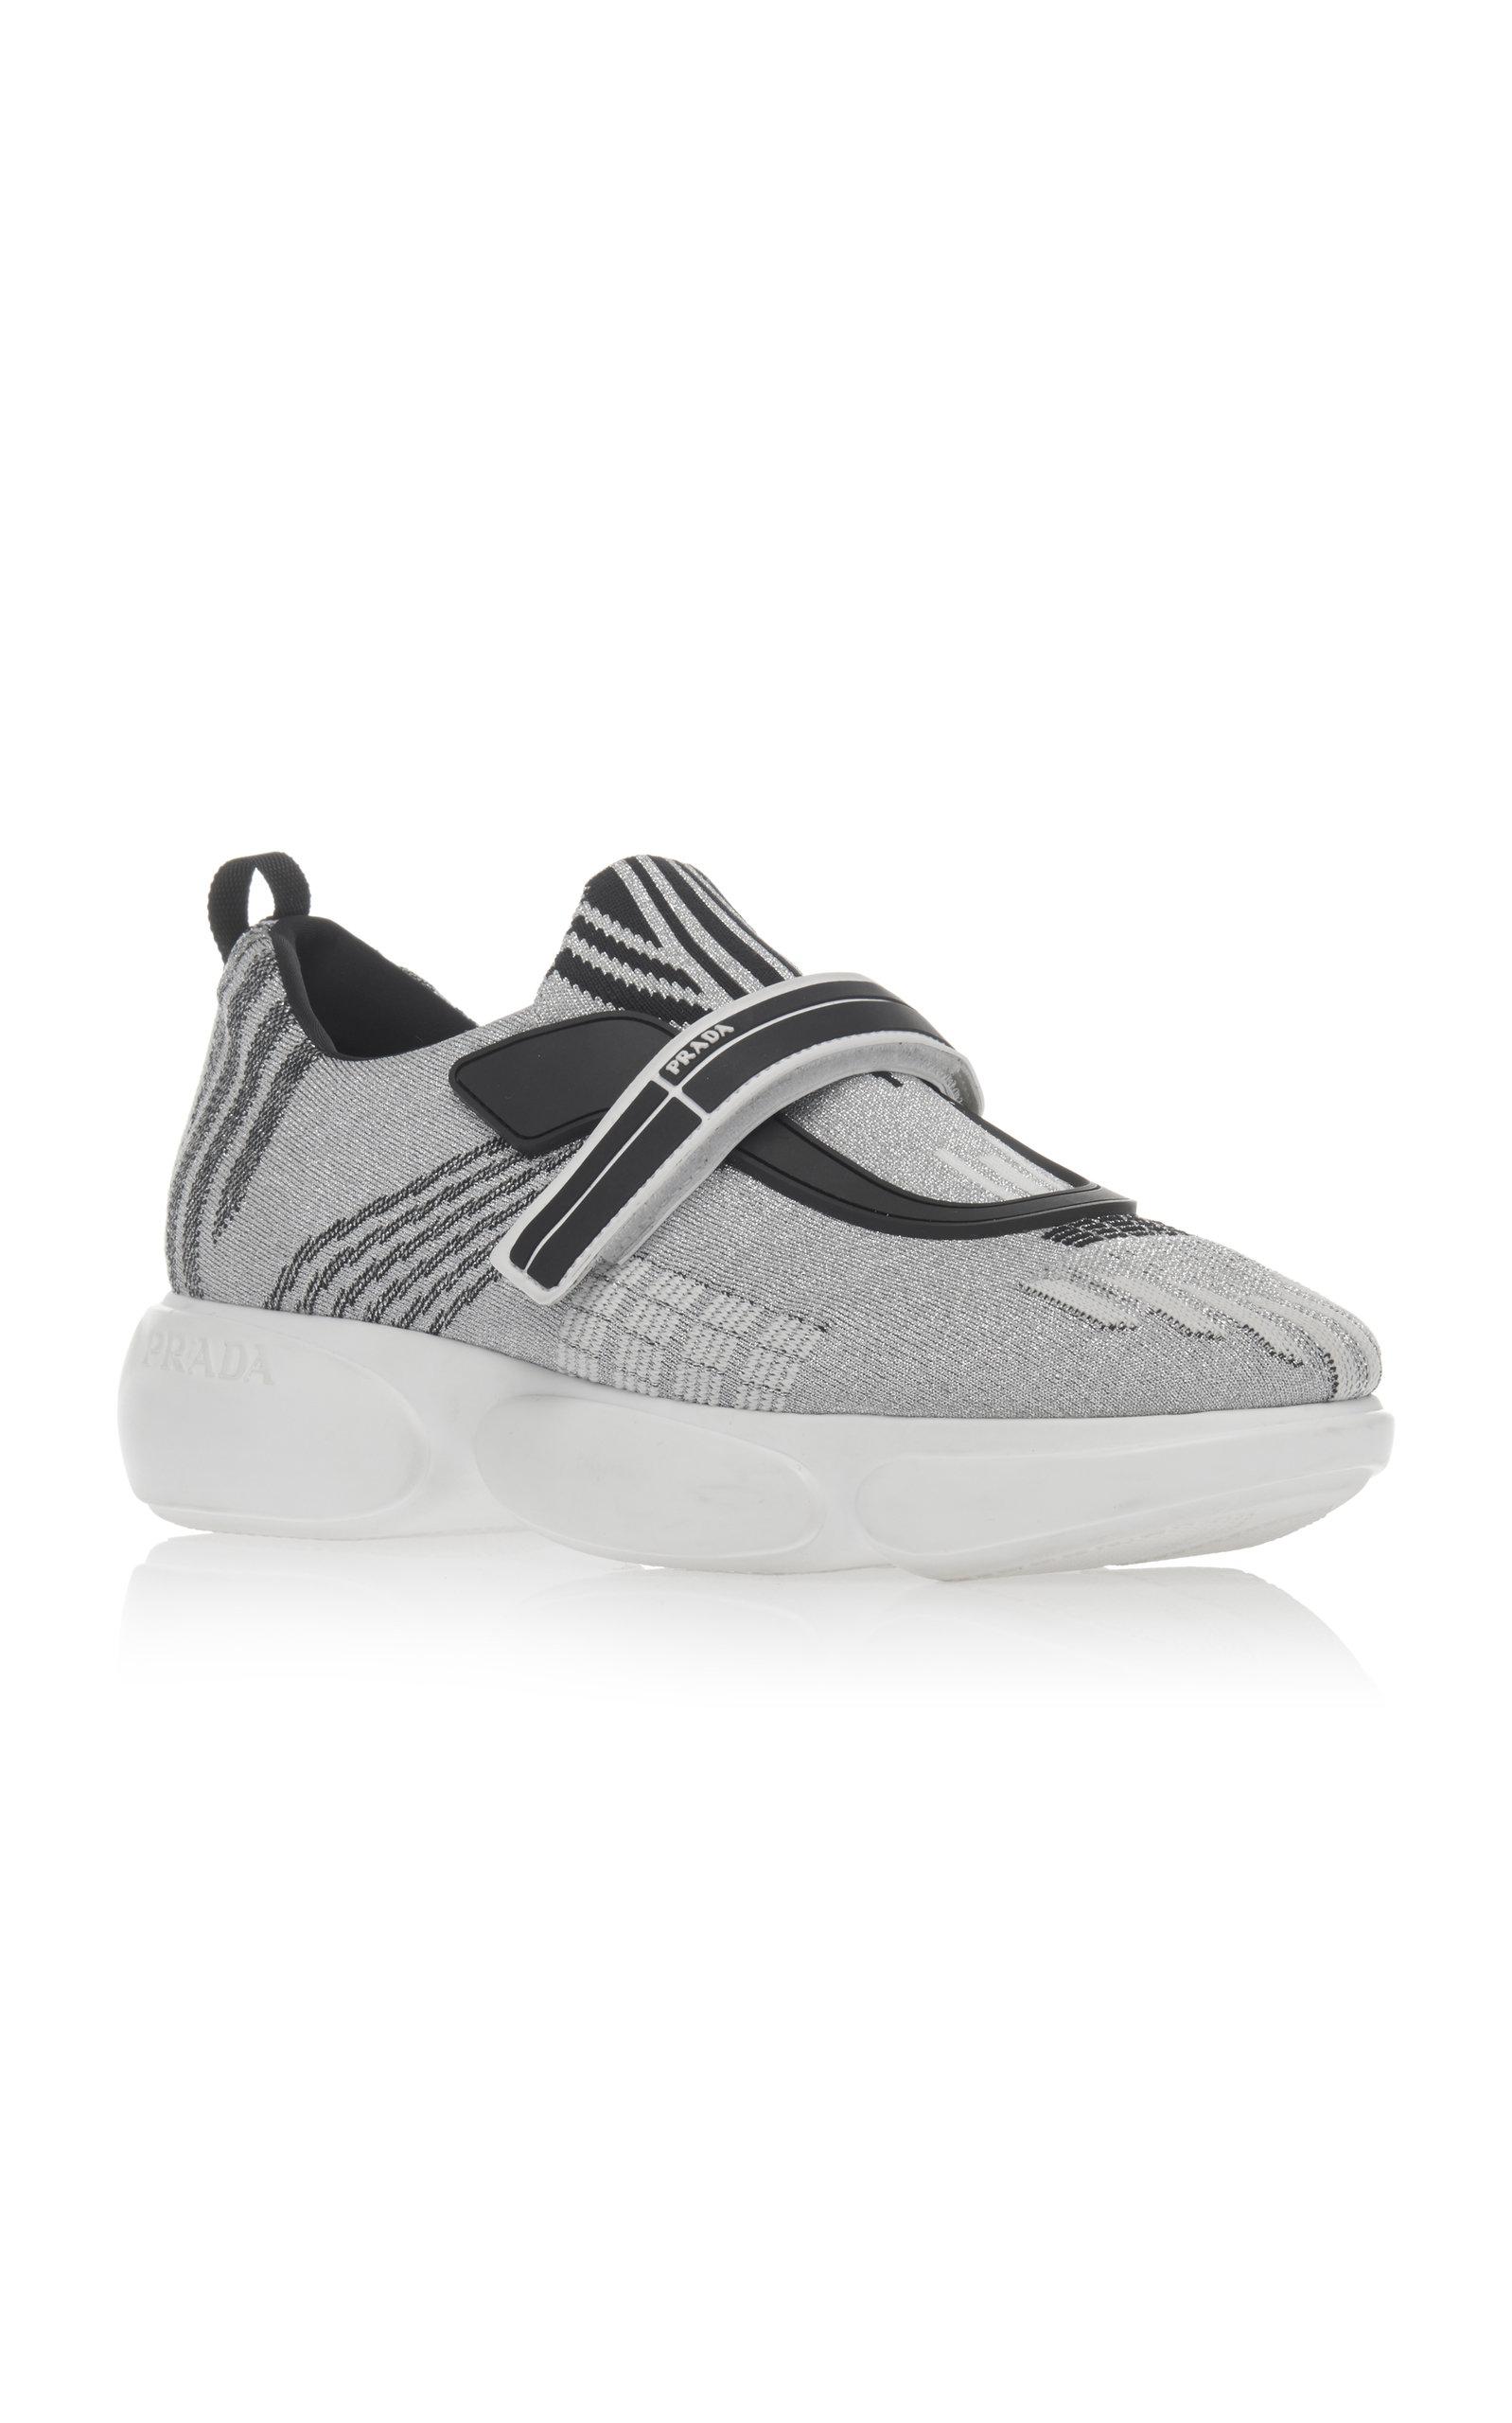 Prada Synthetic Cloudbust Nylon Slip On Sneakers in Grey (Gray) - Lyst